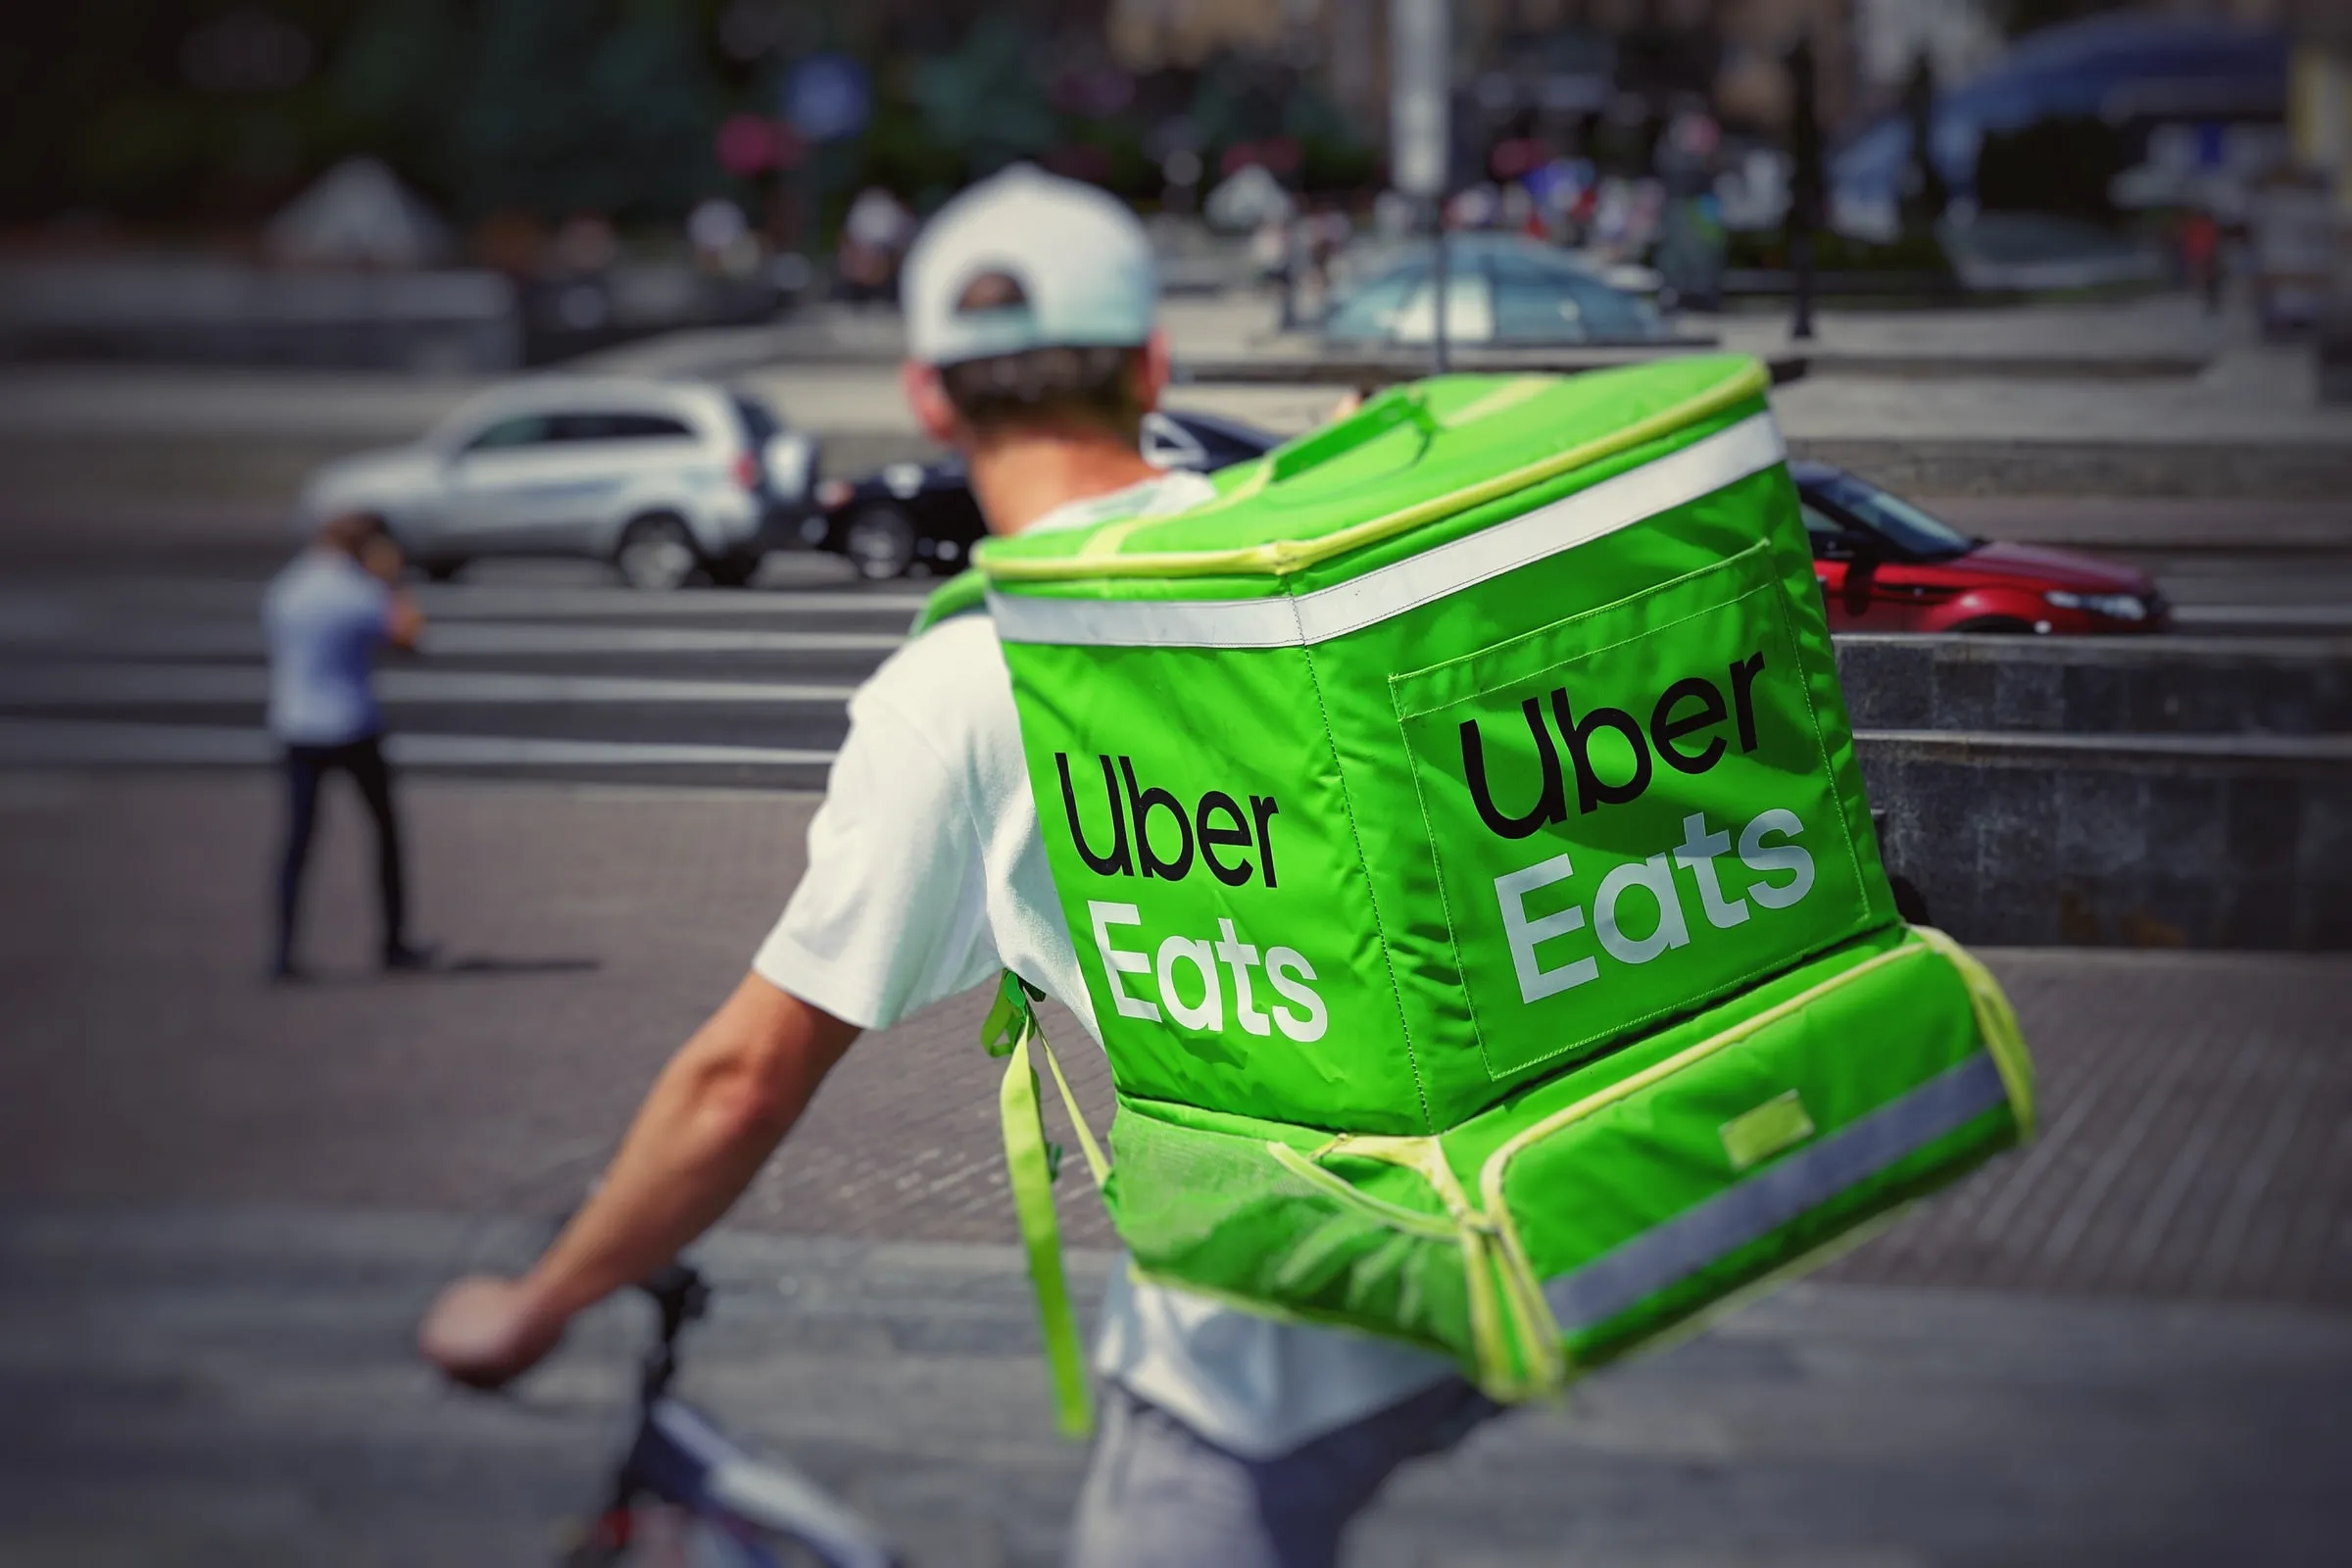 Uber Eats Business Model | How Does Uber Eats Make Money? 3